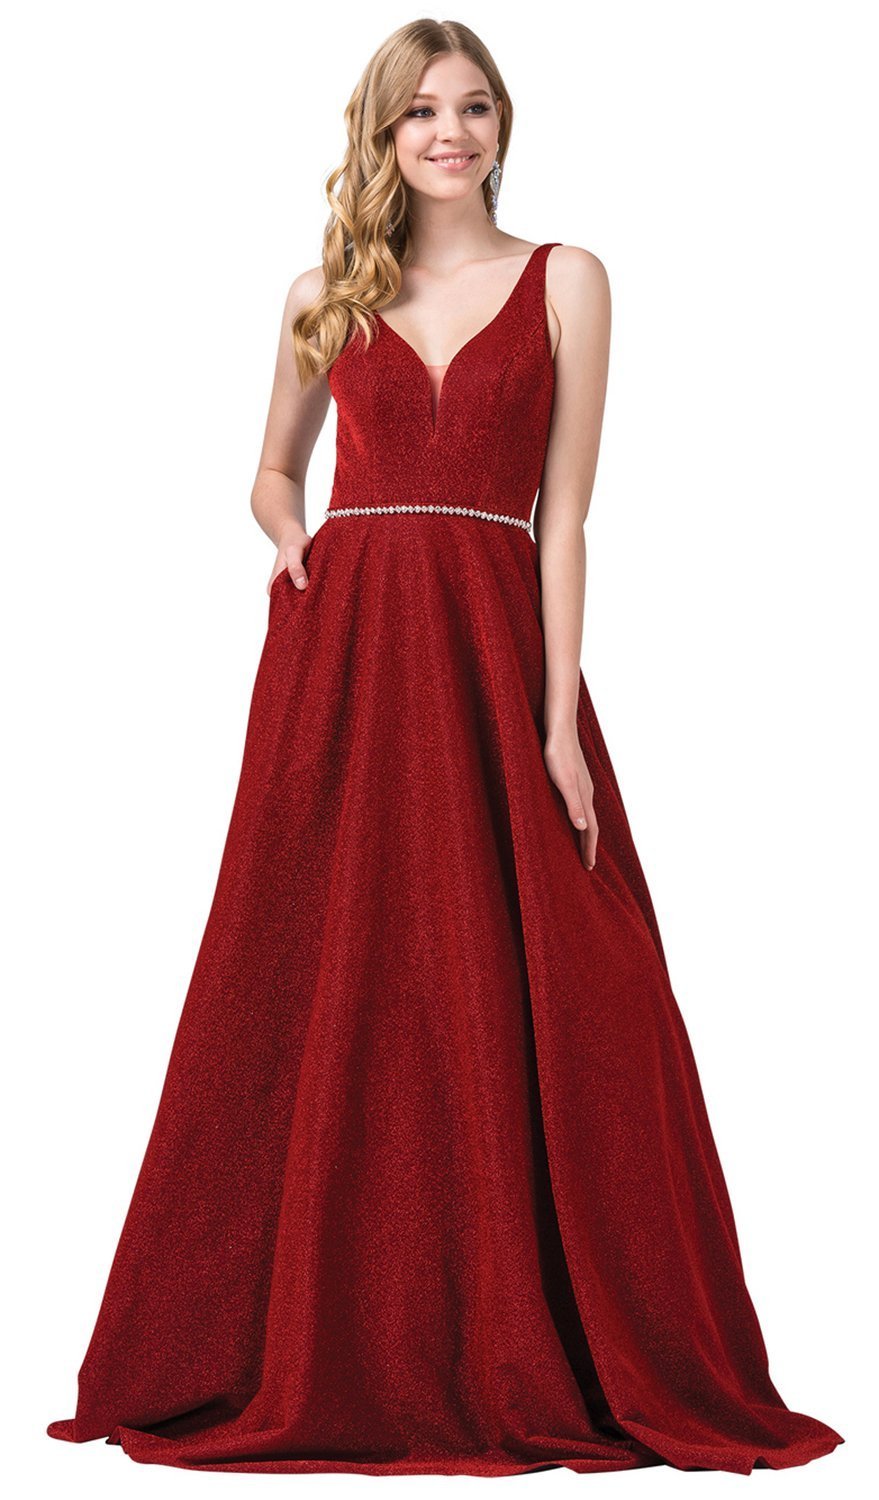 Dancing Queen - 2706 Deep V-neck A-line Gown in Red